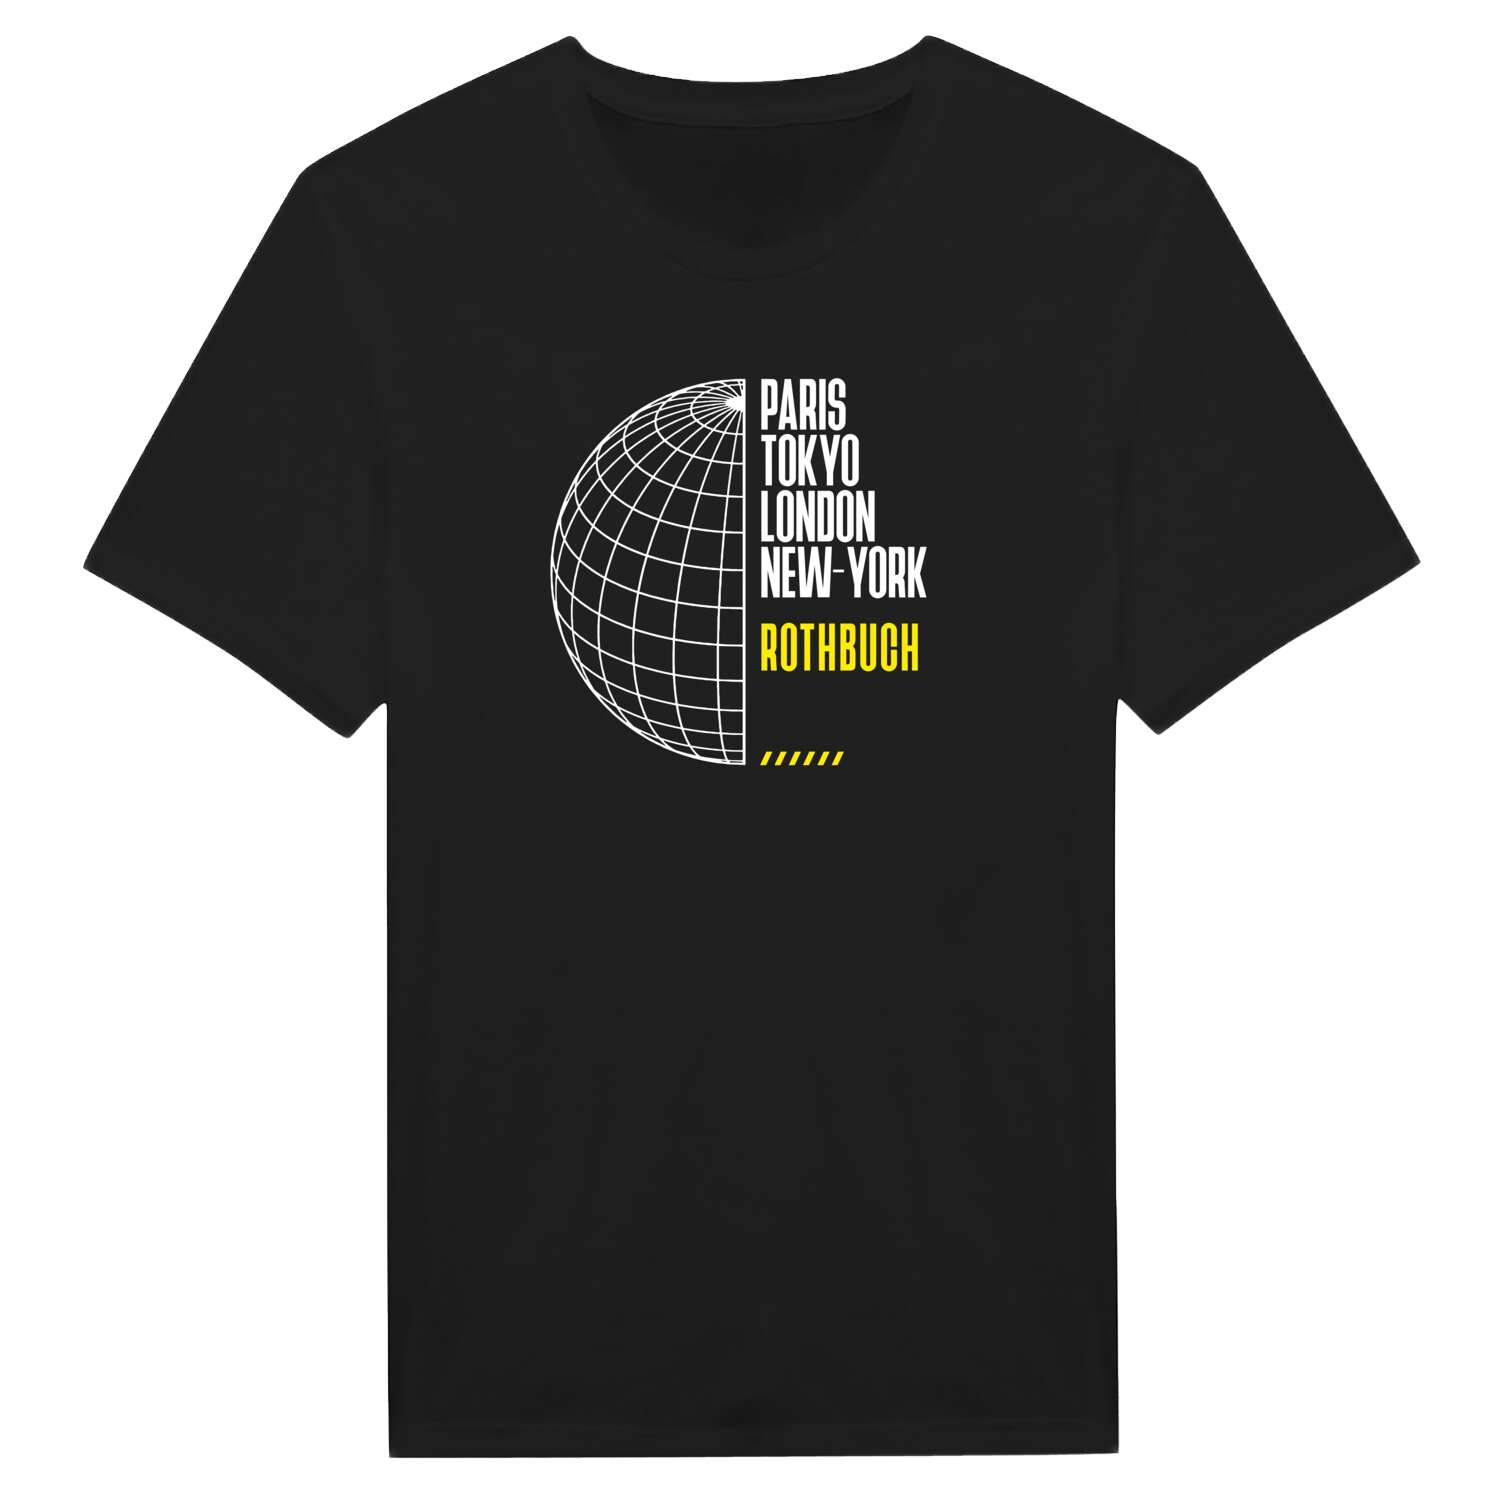 Rothbuch T-Shirt »Paris Tokyo London«